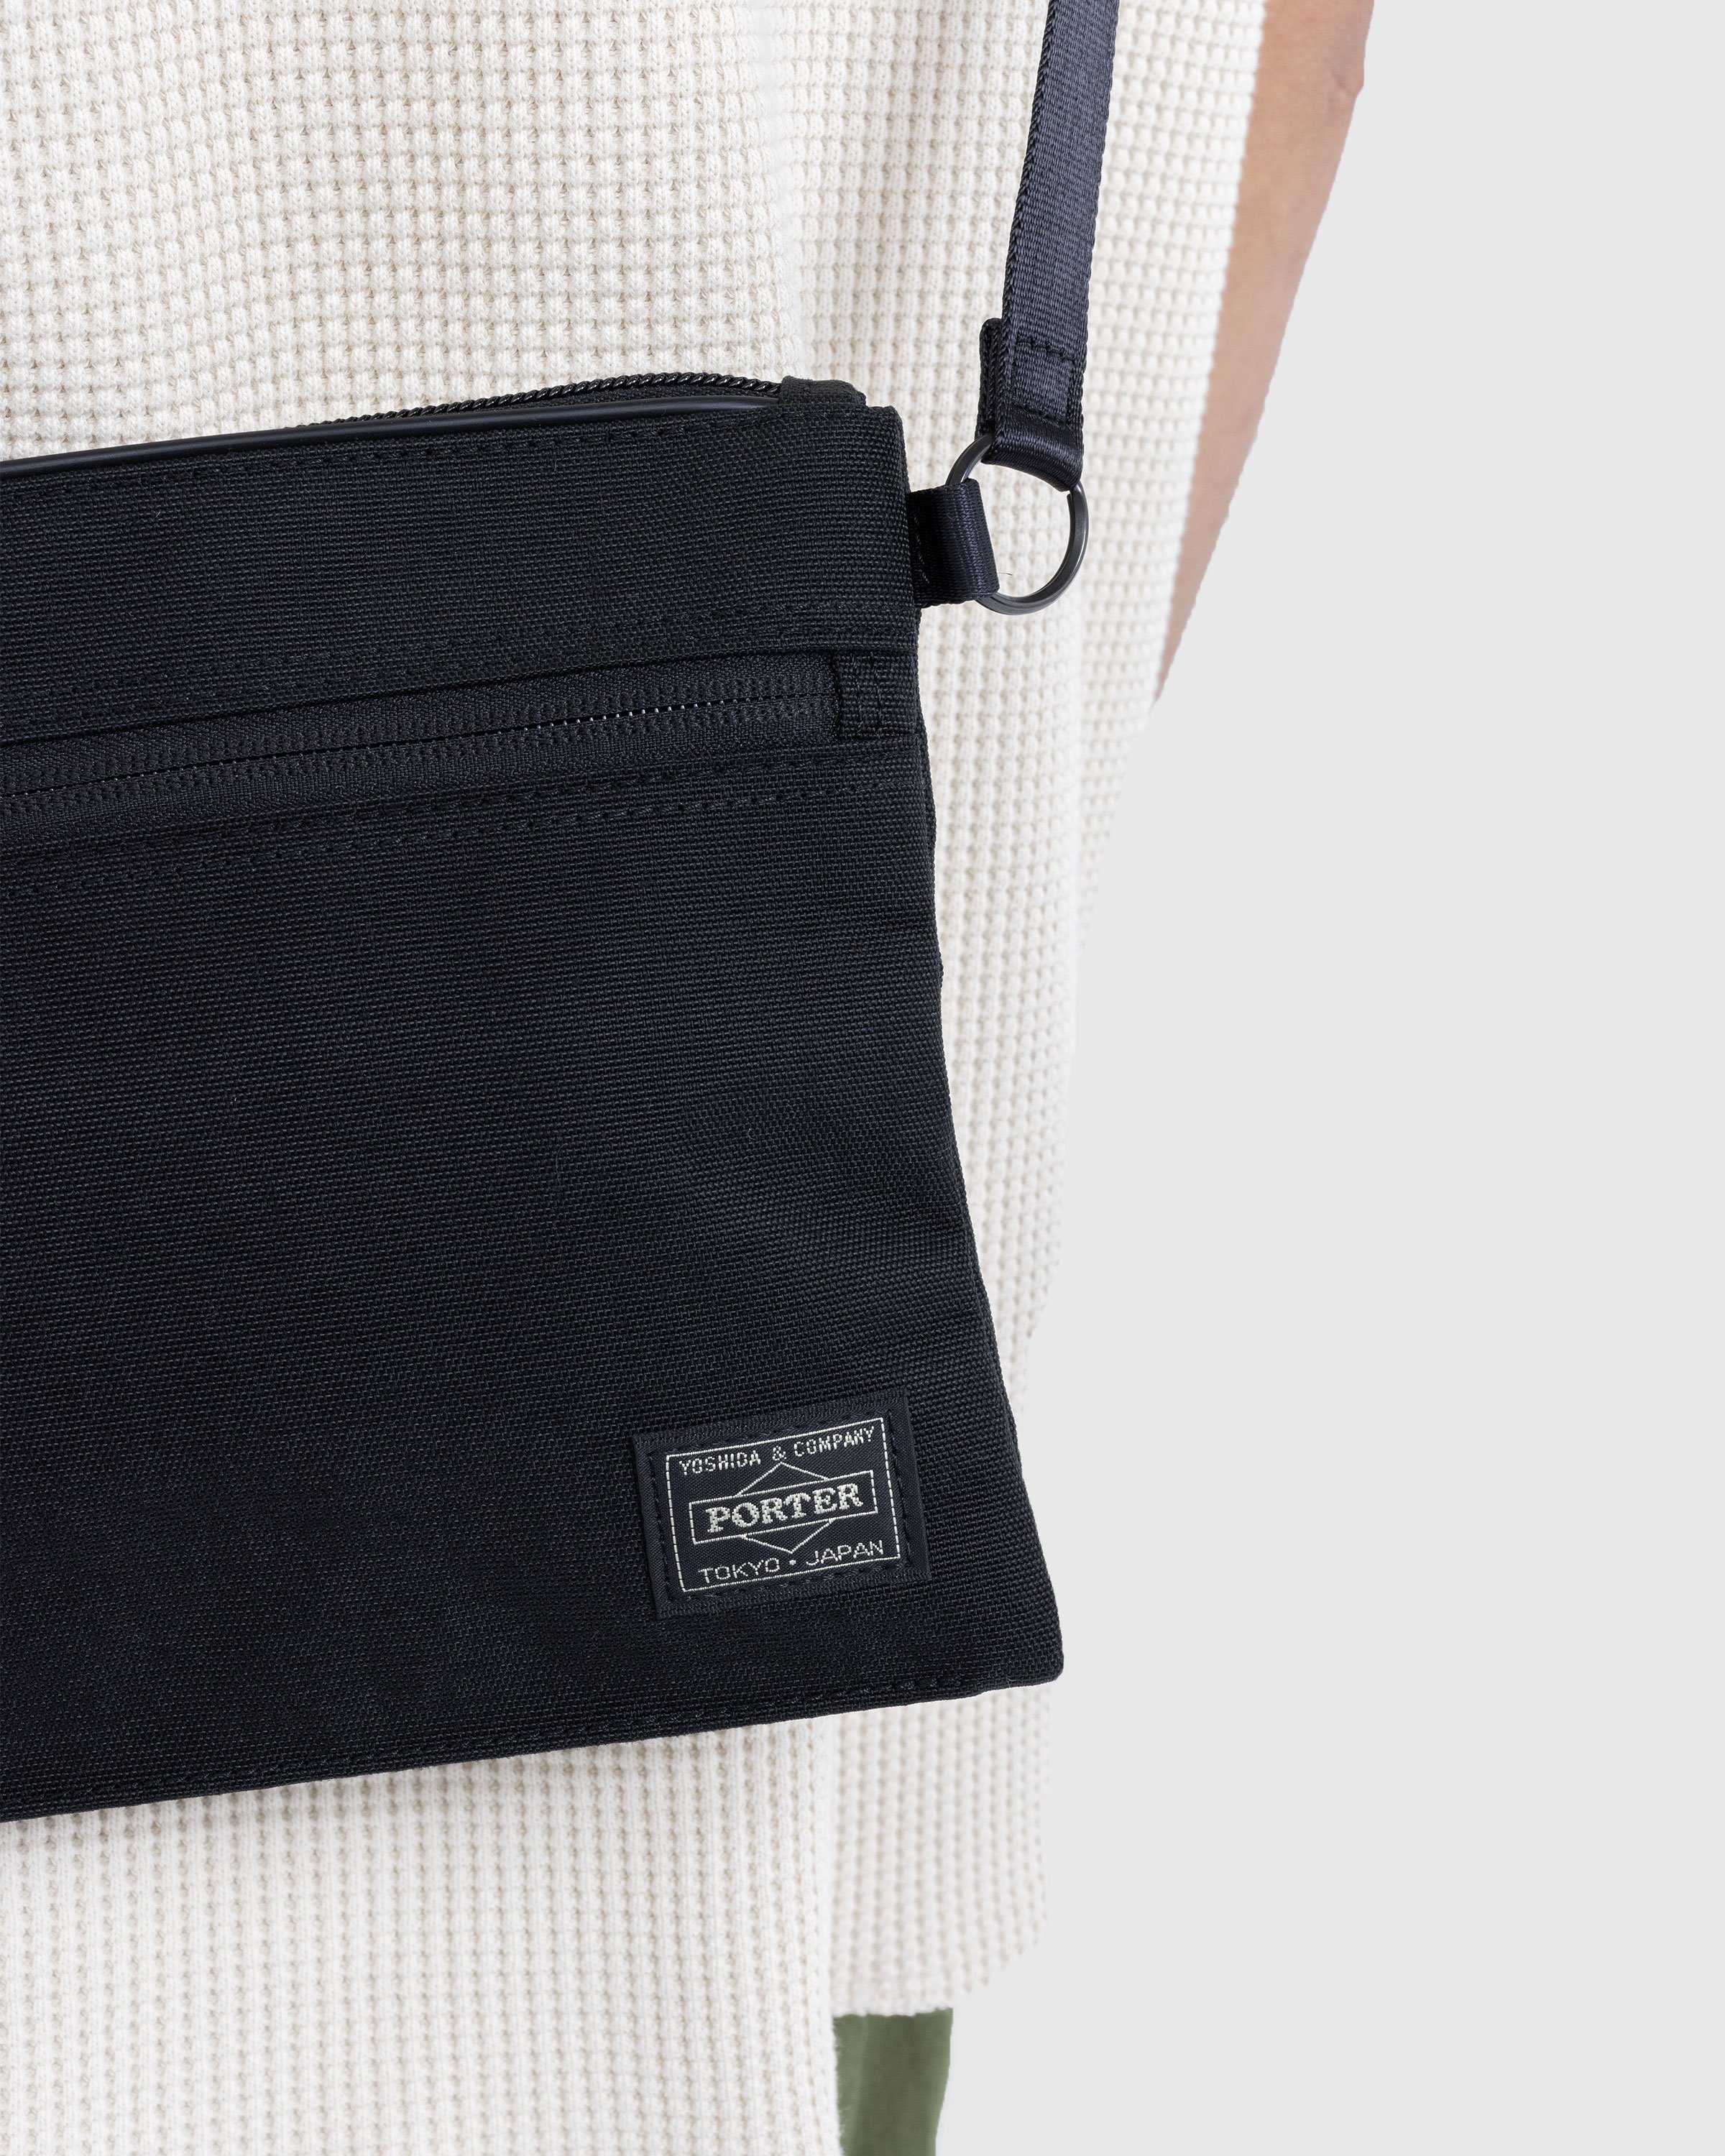 Porter-Yoshida & Co. - Sacoche Hybrid Shoulder Bag Black - Accessories - Black - Image 5